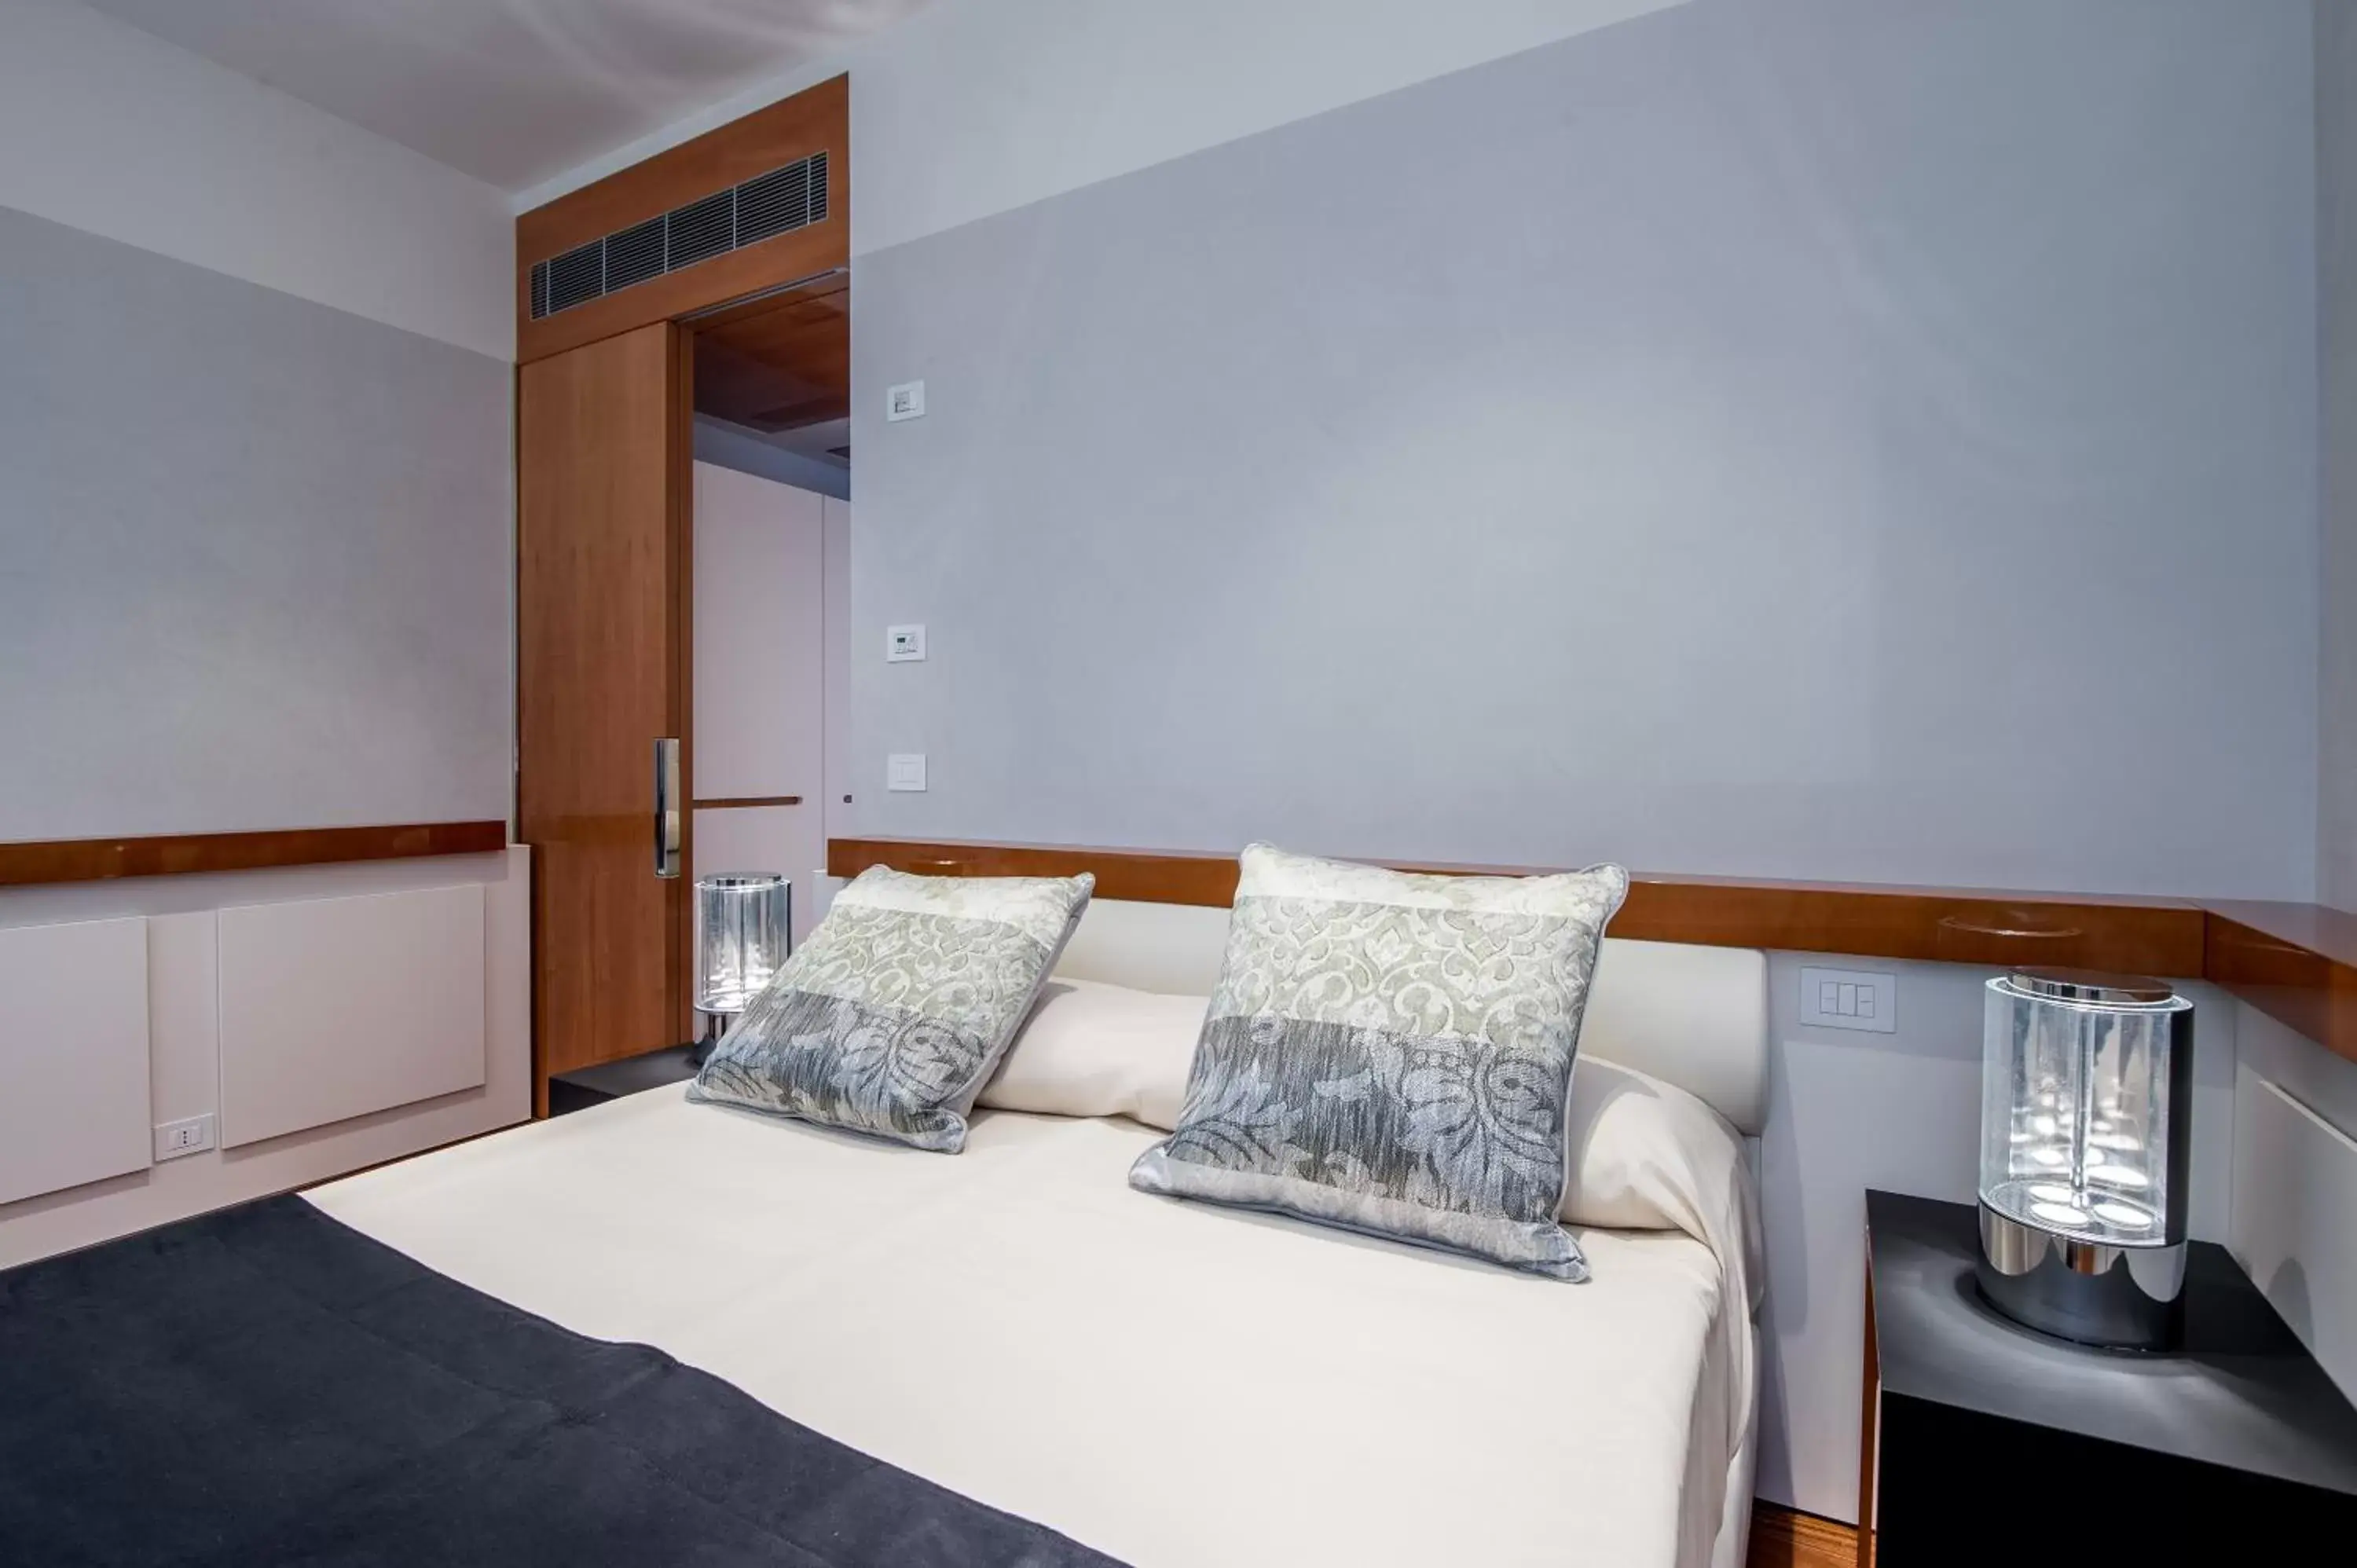 Bed, Room Photo in Hotel Rialto